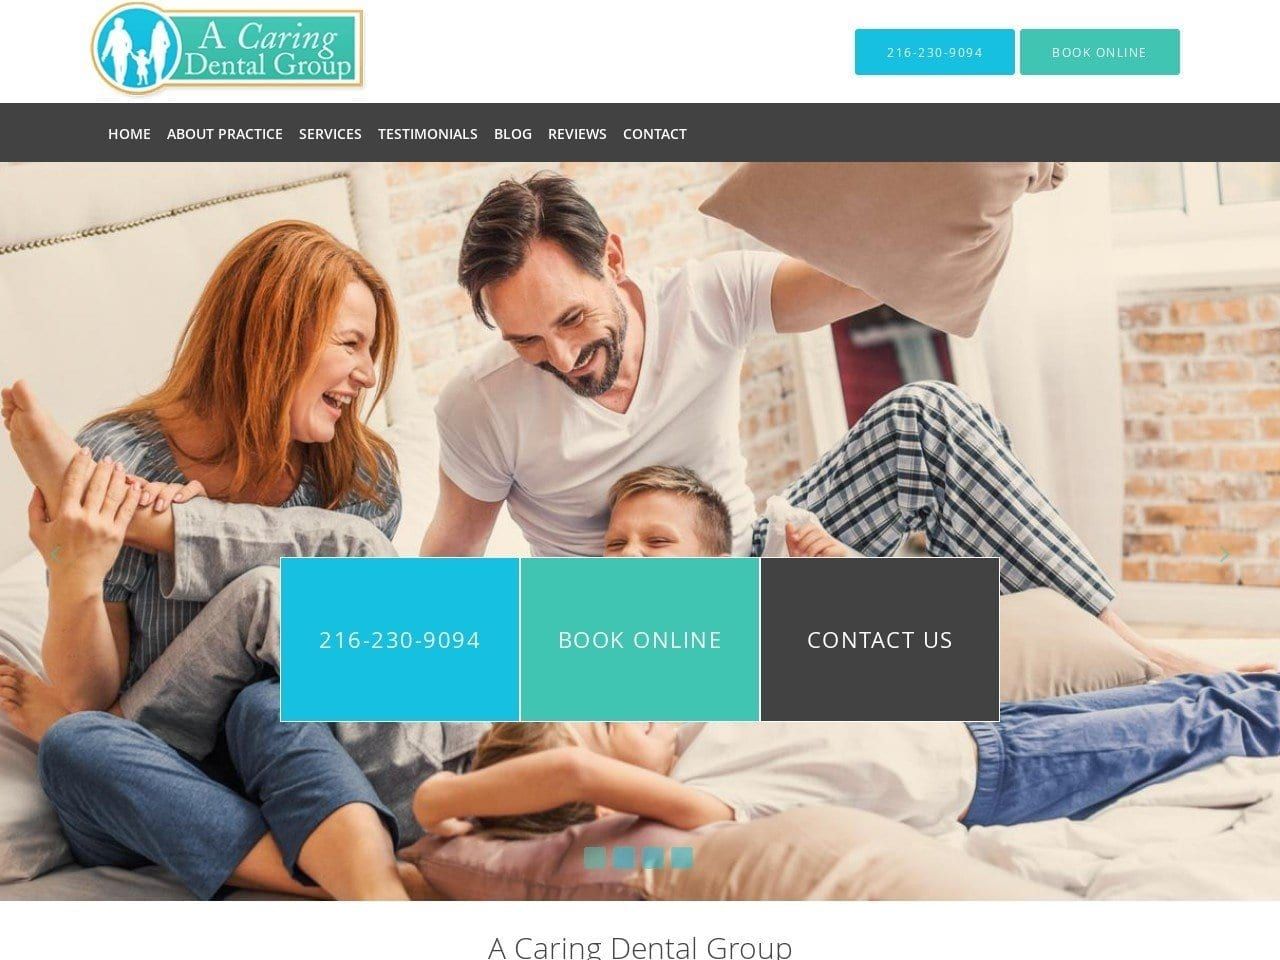 A Caring Dental Group Website Screenshot from acaringdentalgroup.com